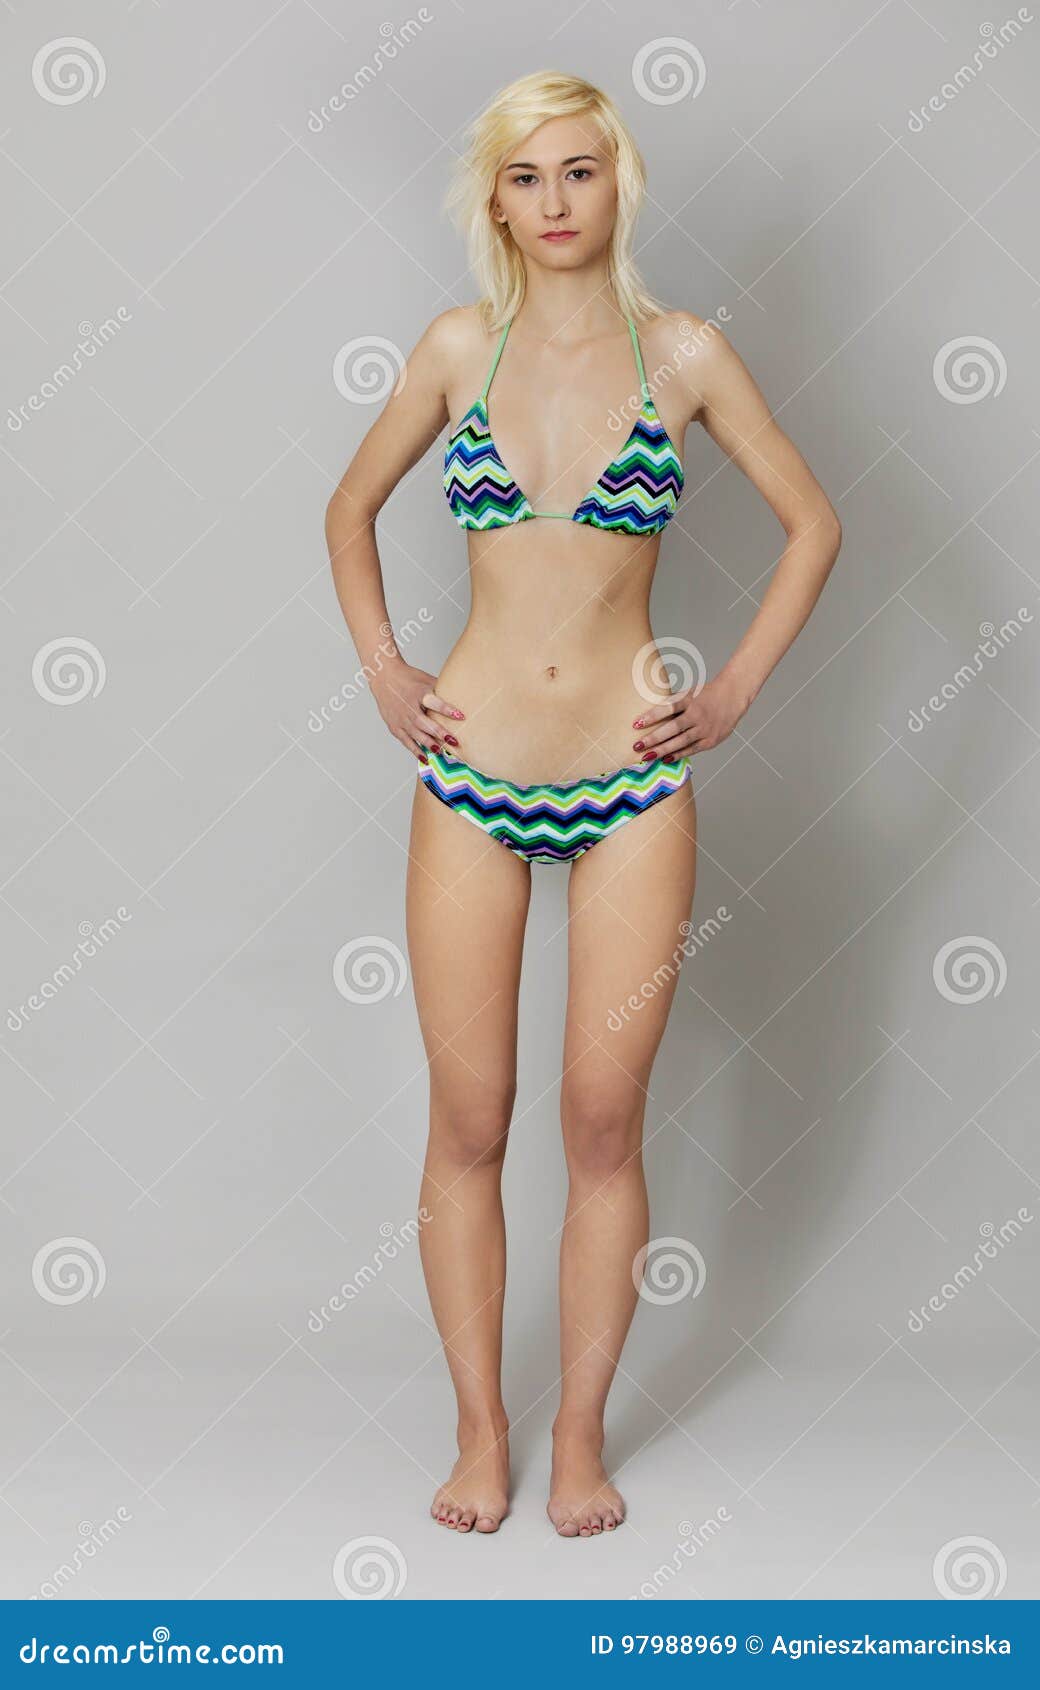 Best of Young woman in a bikini